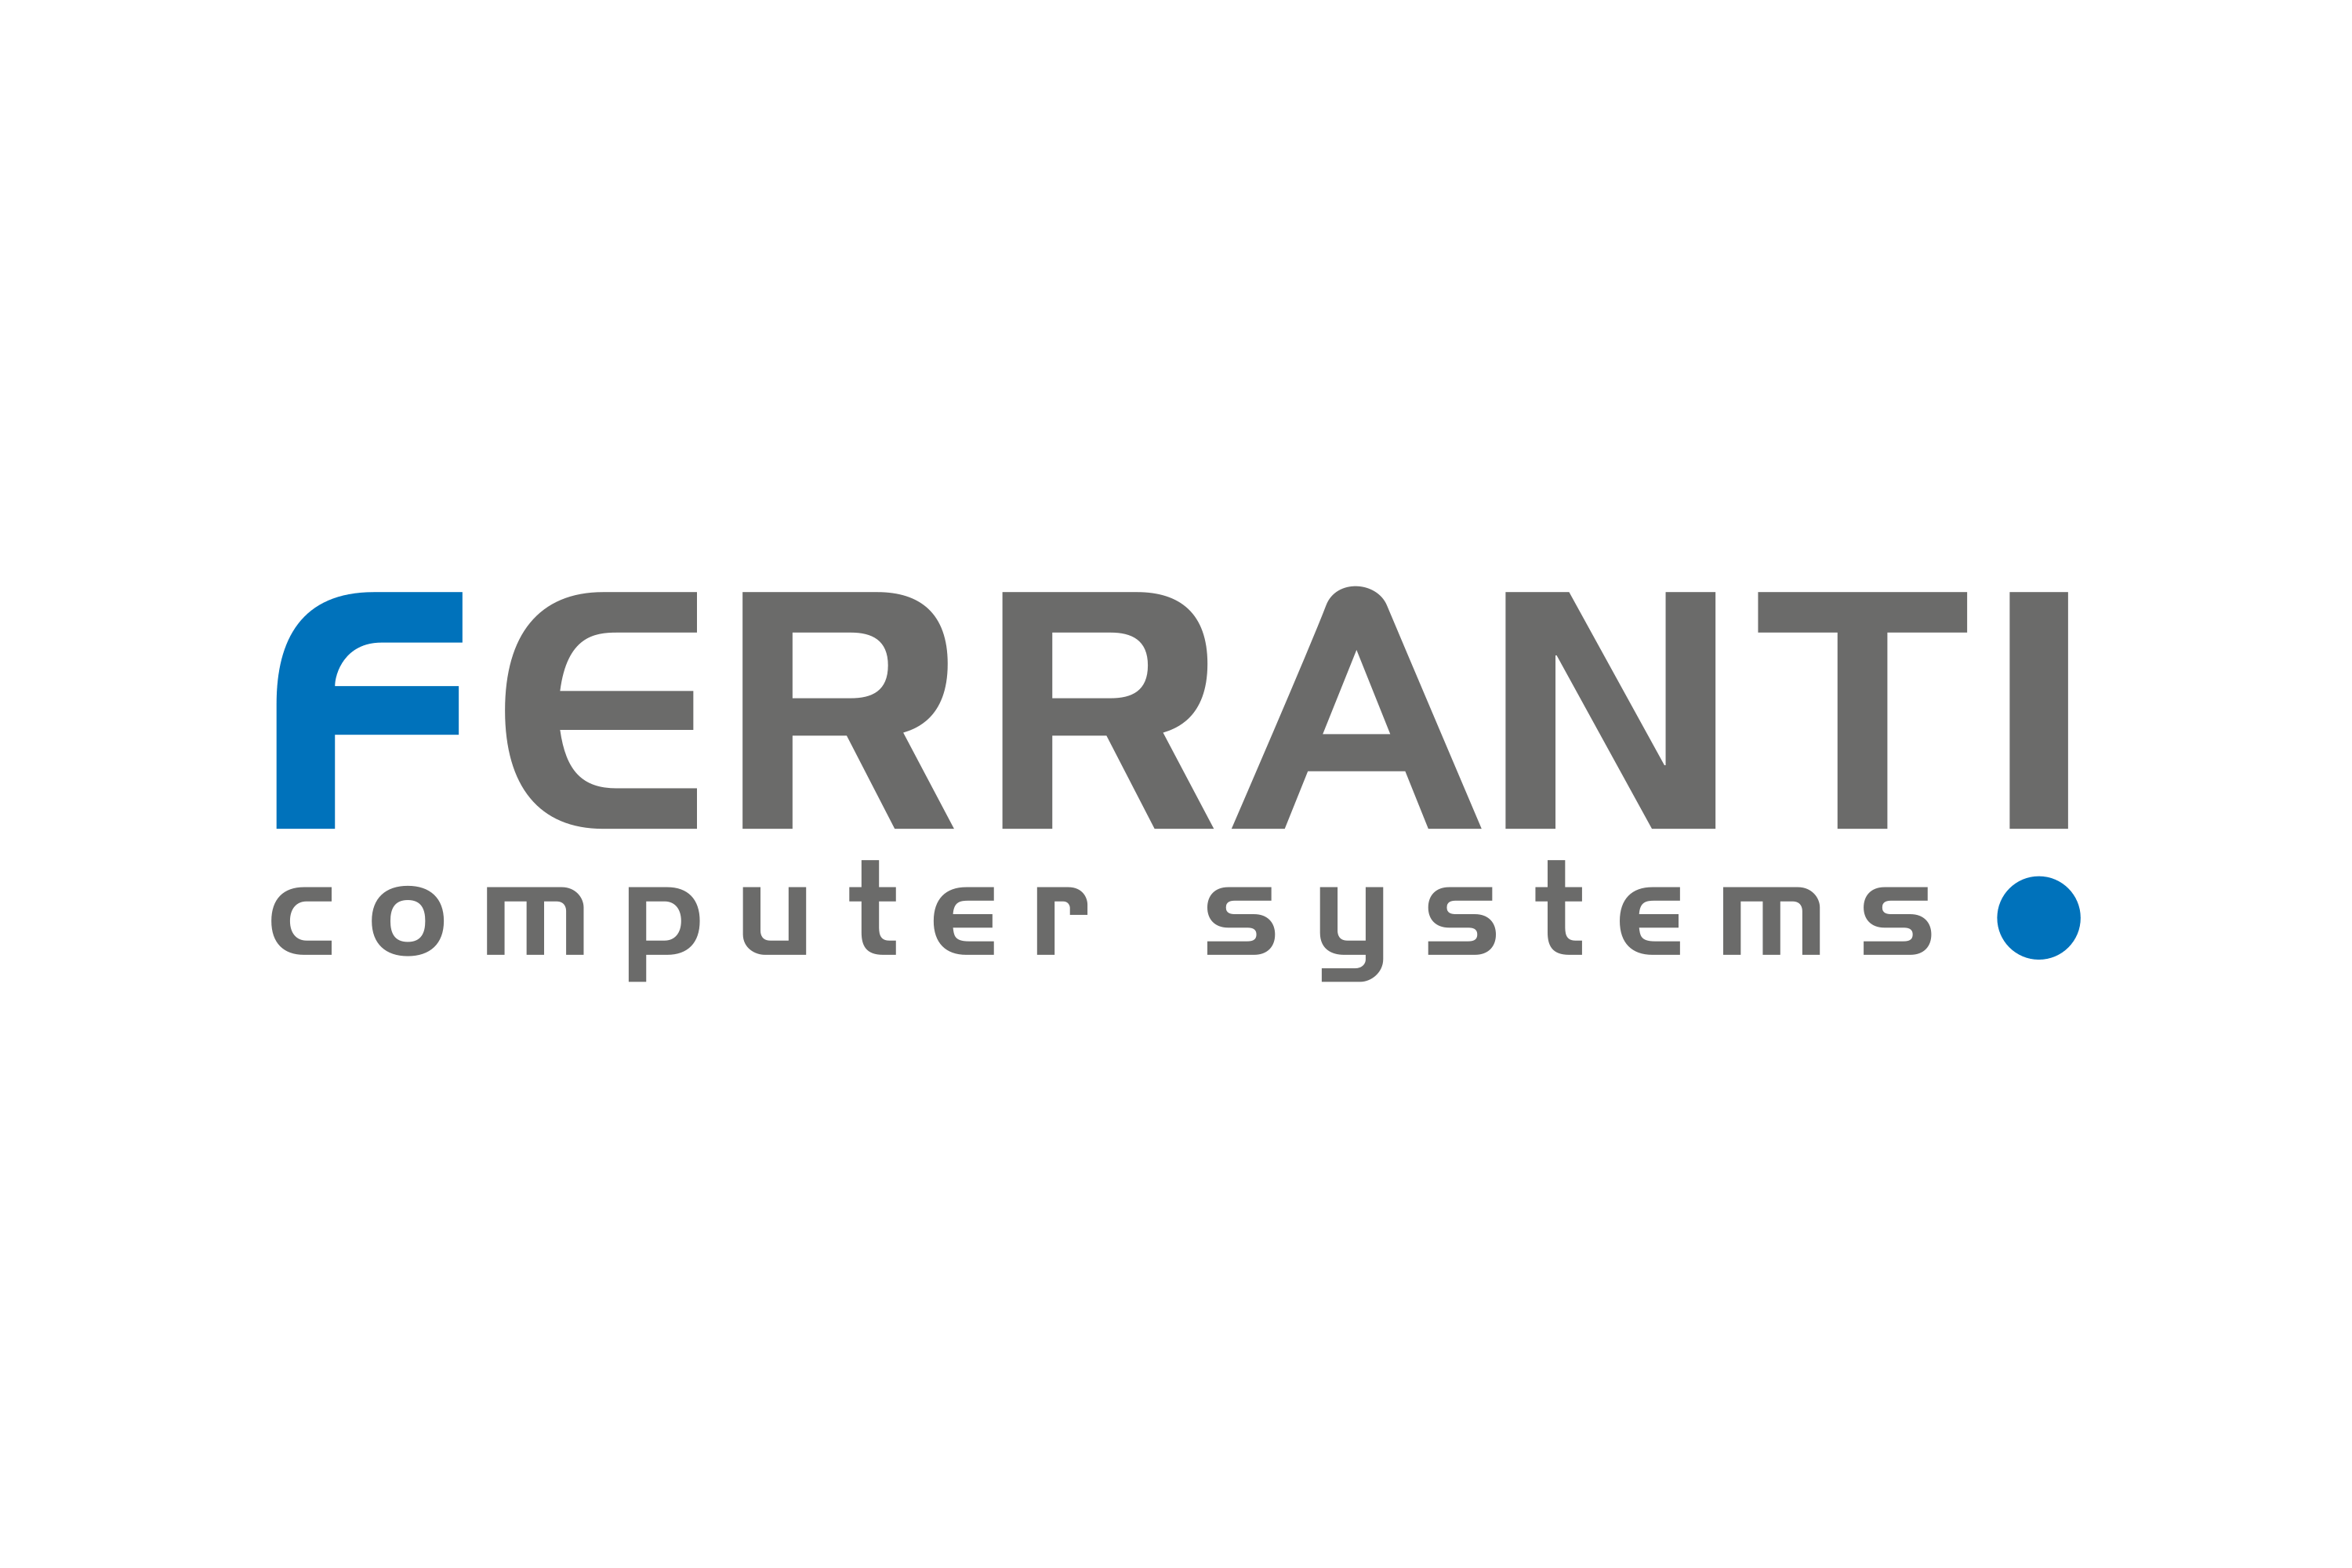 Ferranti Computer Systems Logo